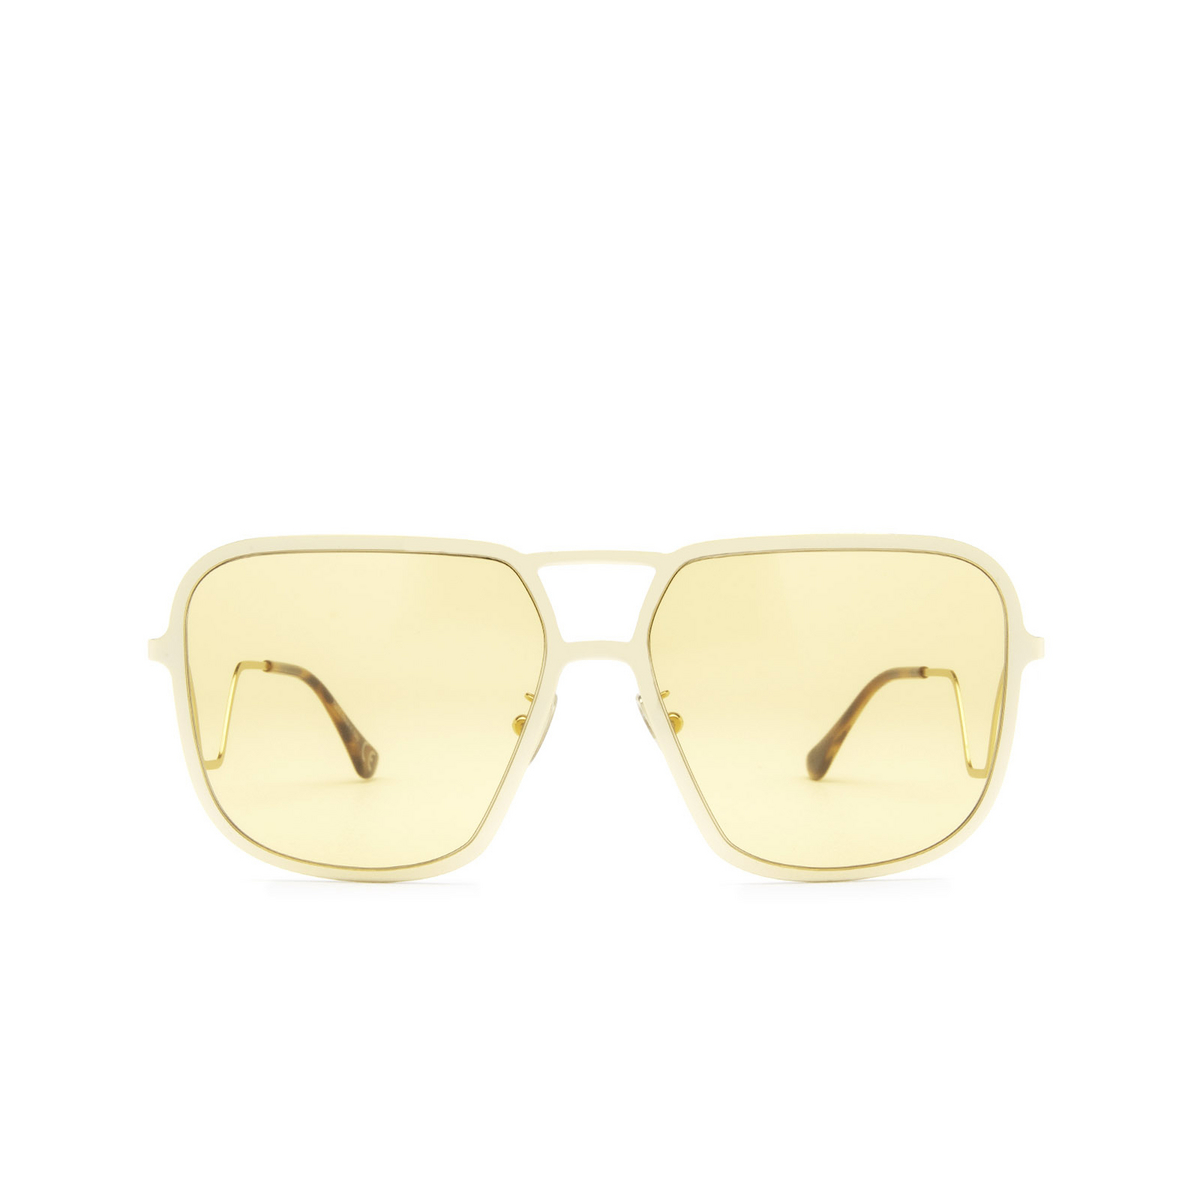 Marni® Square Sunglasses: Ha Long Bay color Yellow HZ2 - front view.